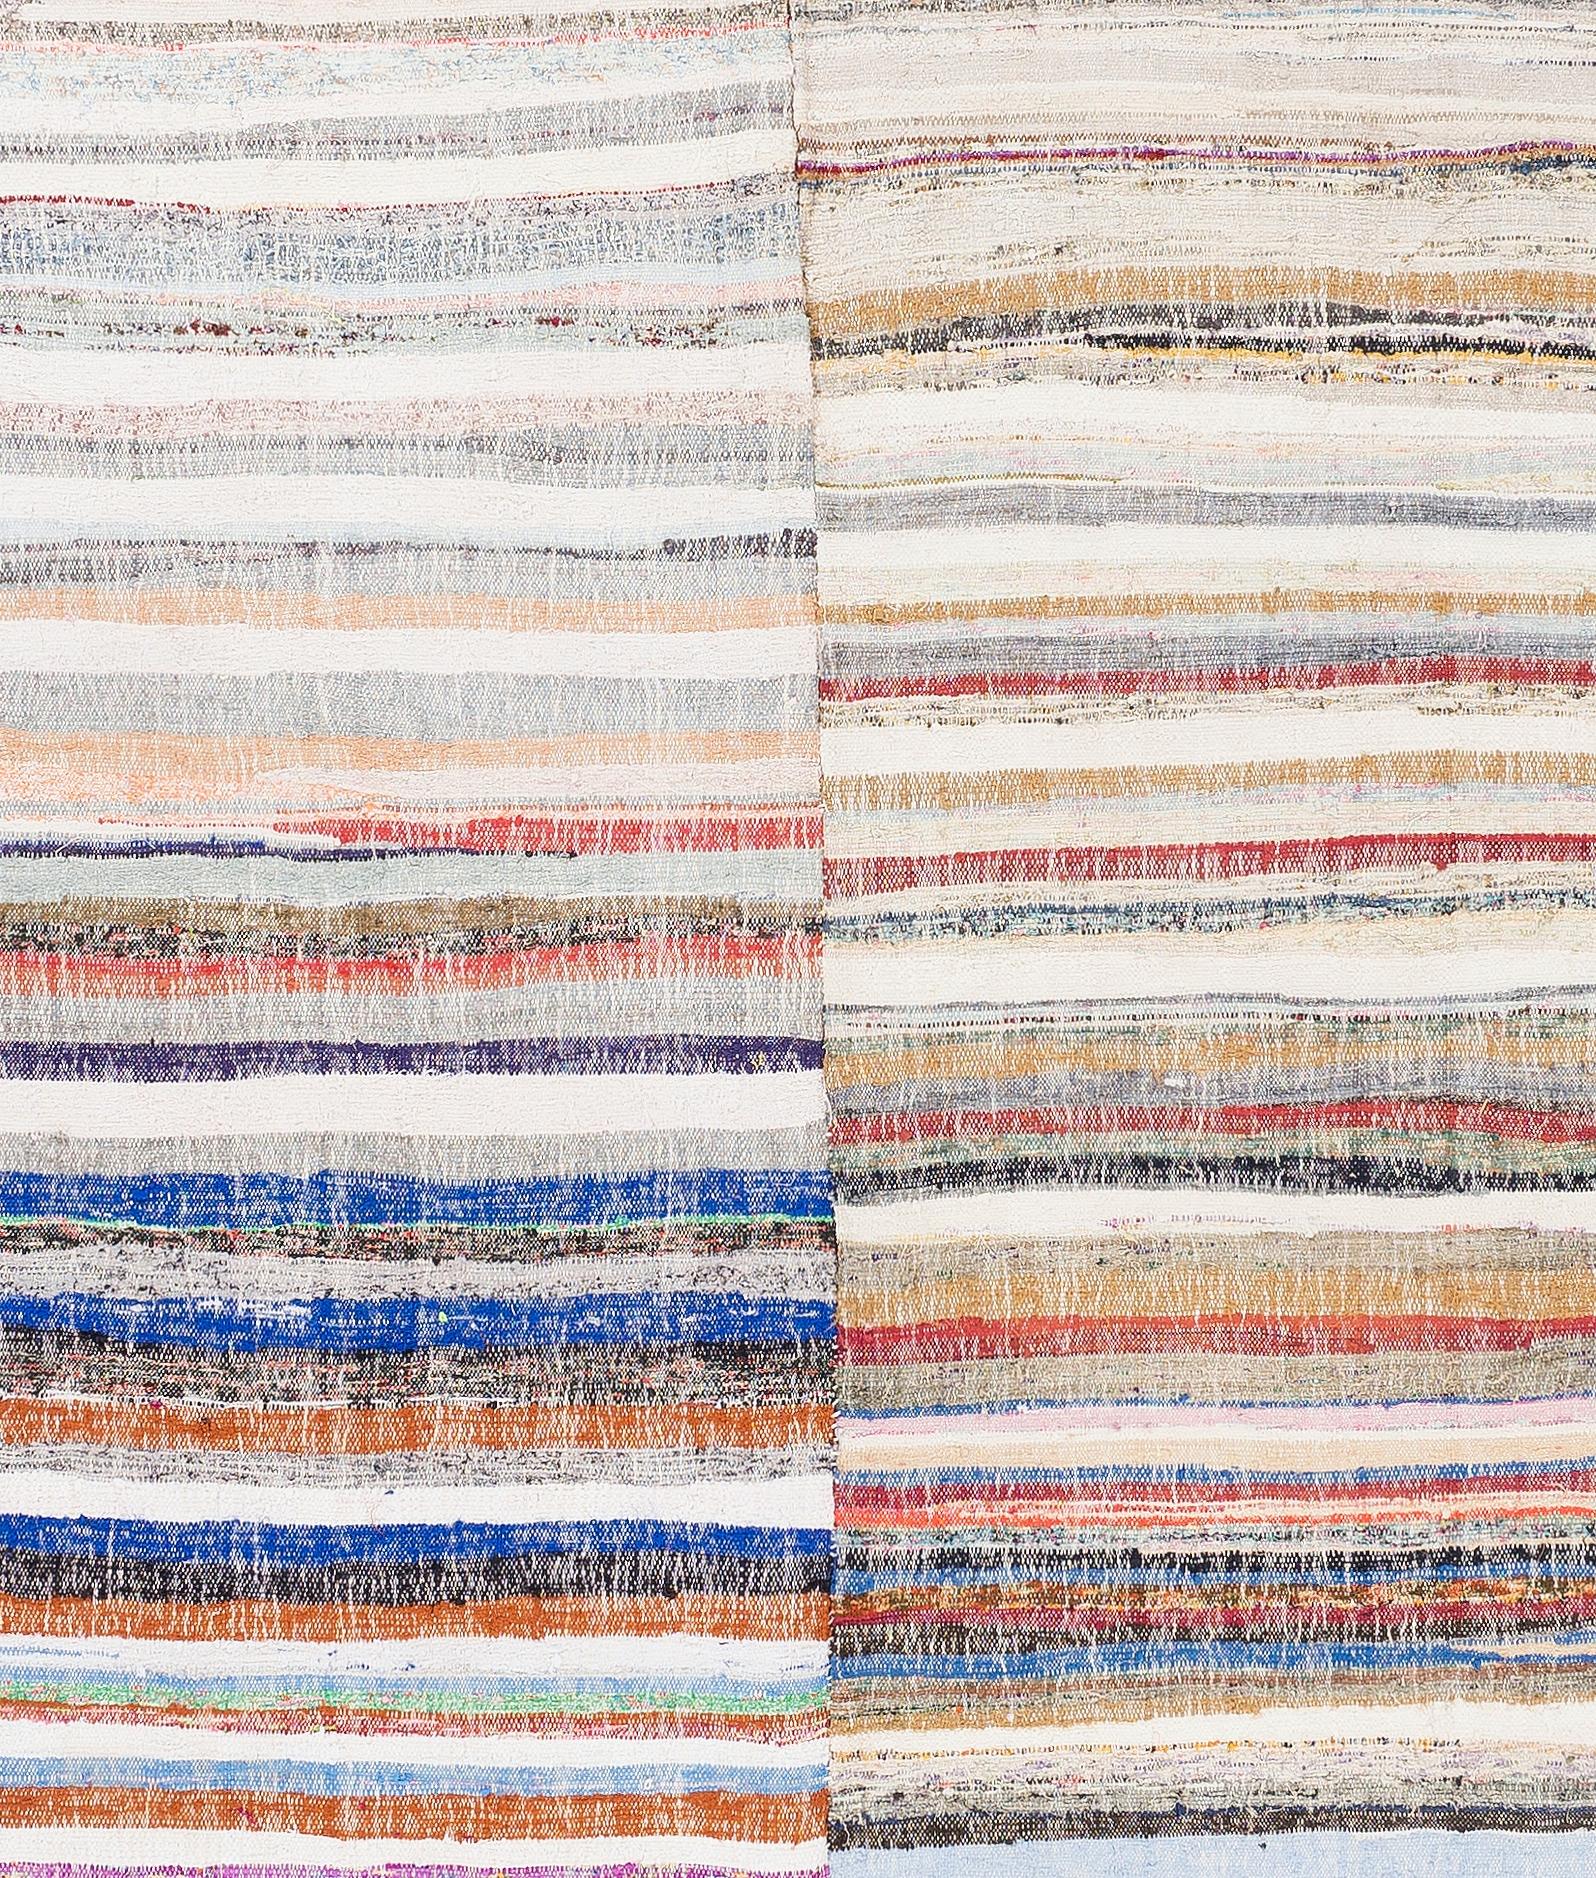 Hand-Woven 7.8x12 Ft Vintage Kilim Carpet, Flatweave Floor Covering, Striped Cotton Rag Rug For Sale